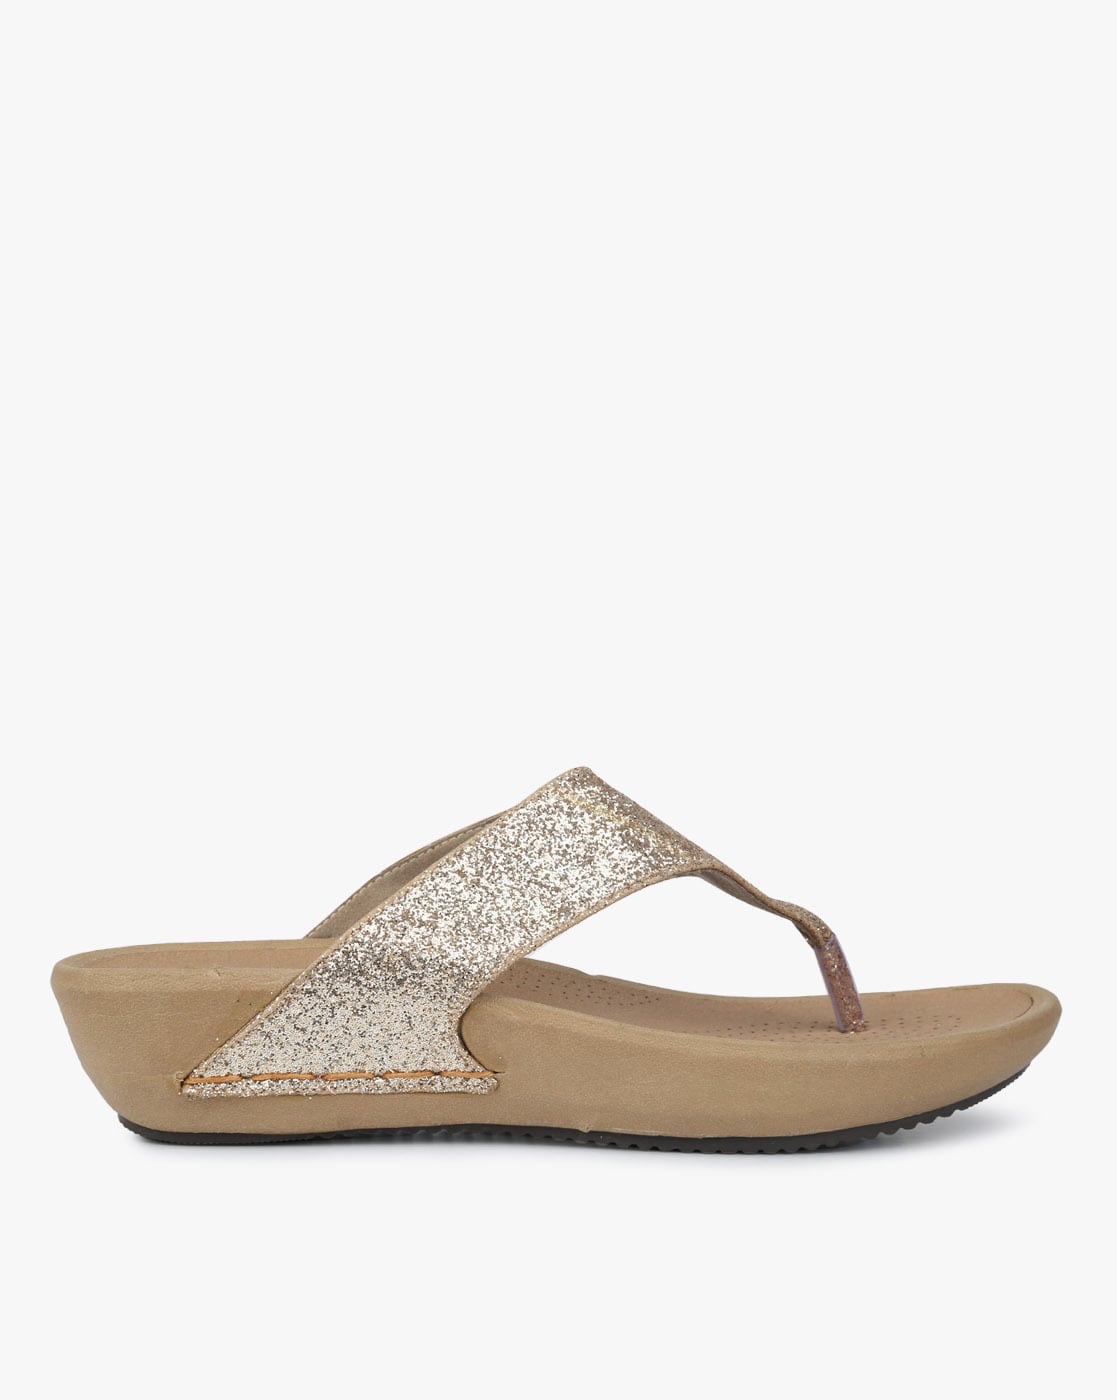 Mochi Womens Synthetic Gold Slippers (Size (3 UK (36 EU)) : Amazon.in:  Fashion